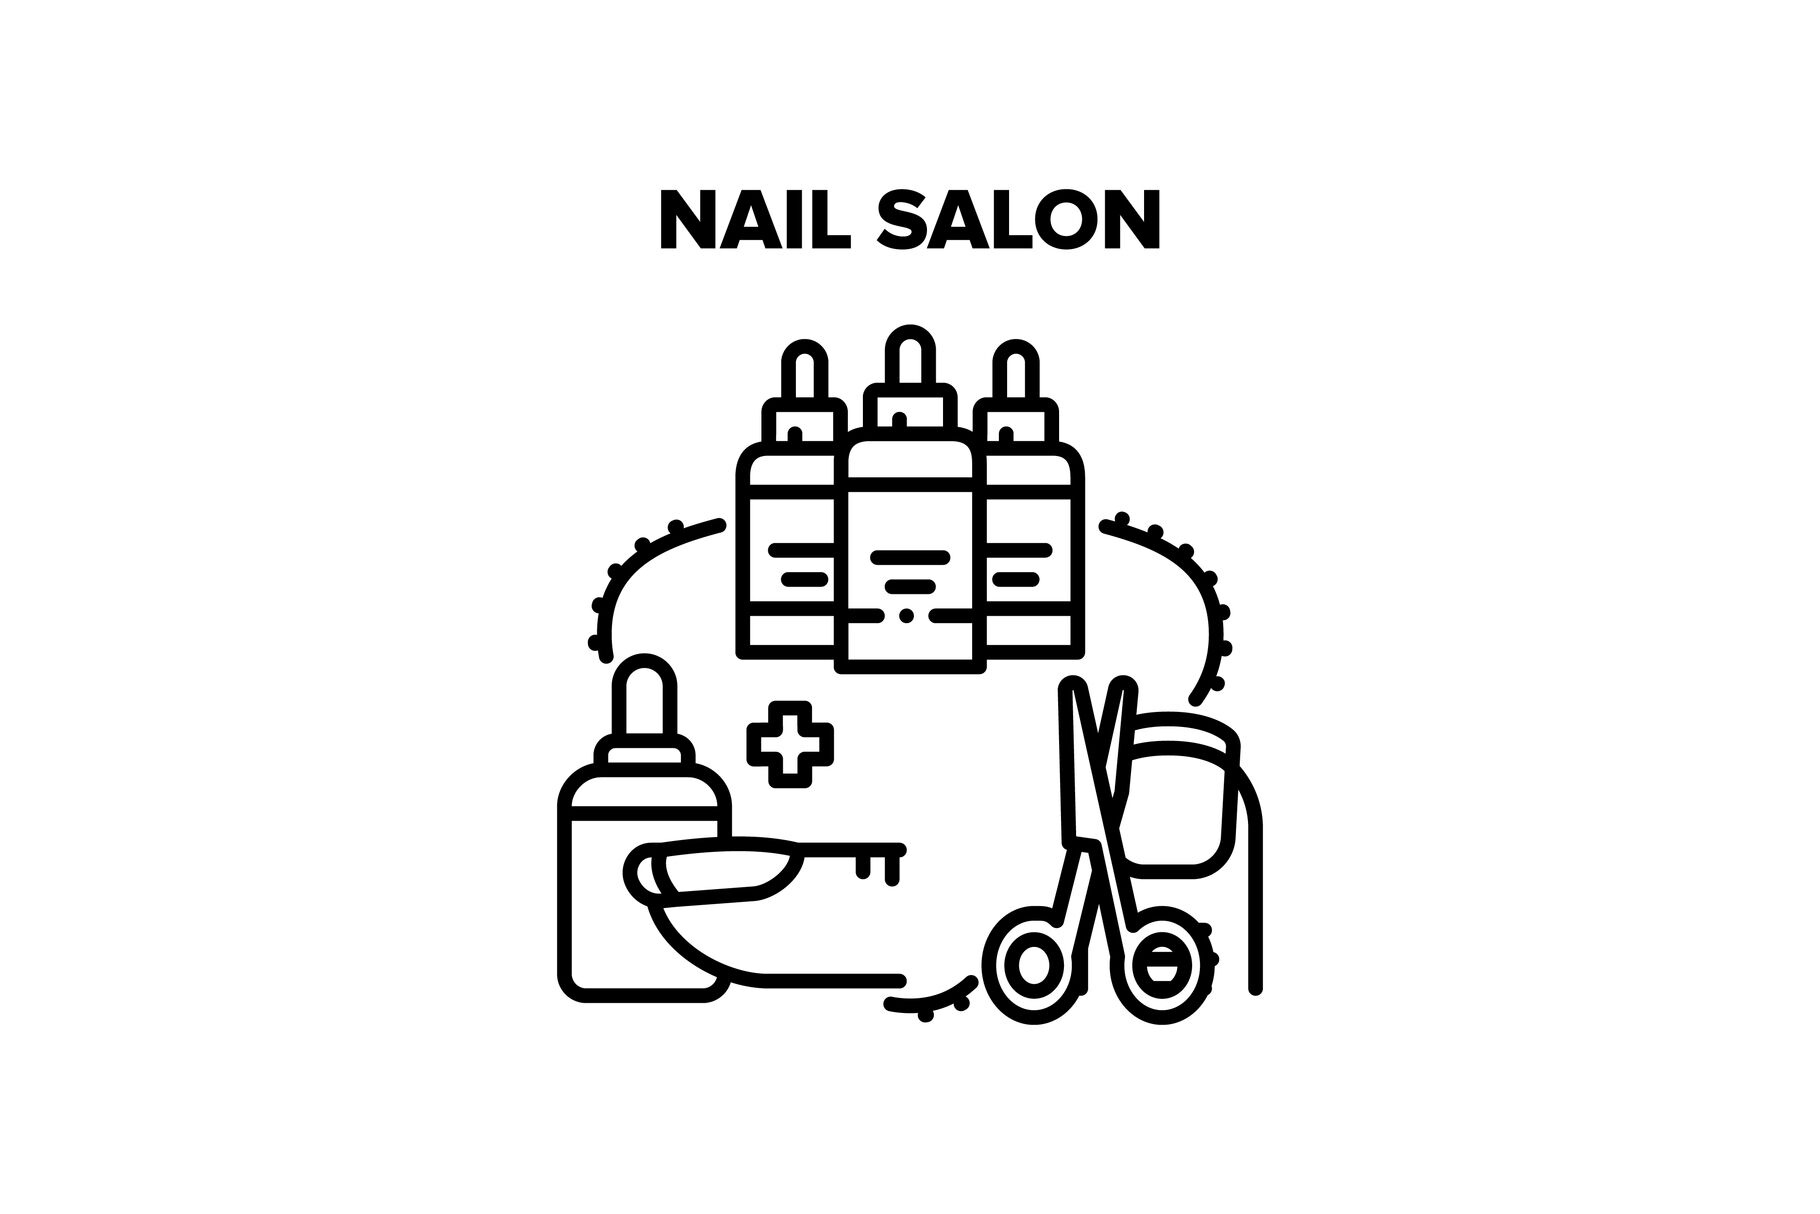 Nail Salon Objects & Elements Set - Vector Image